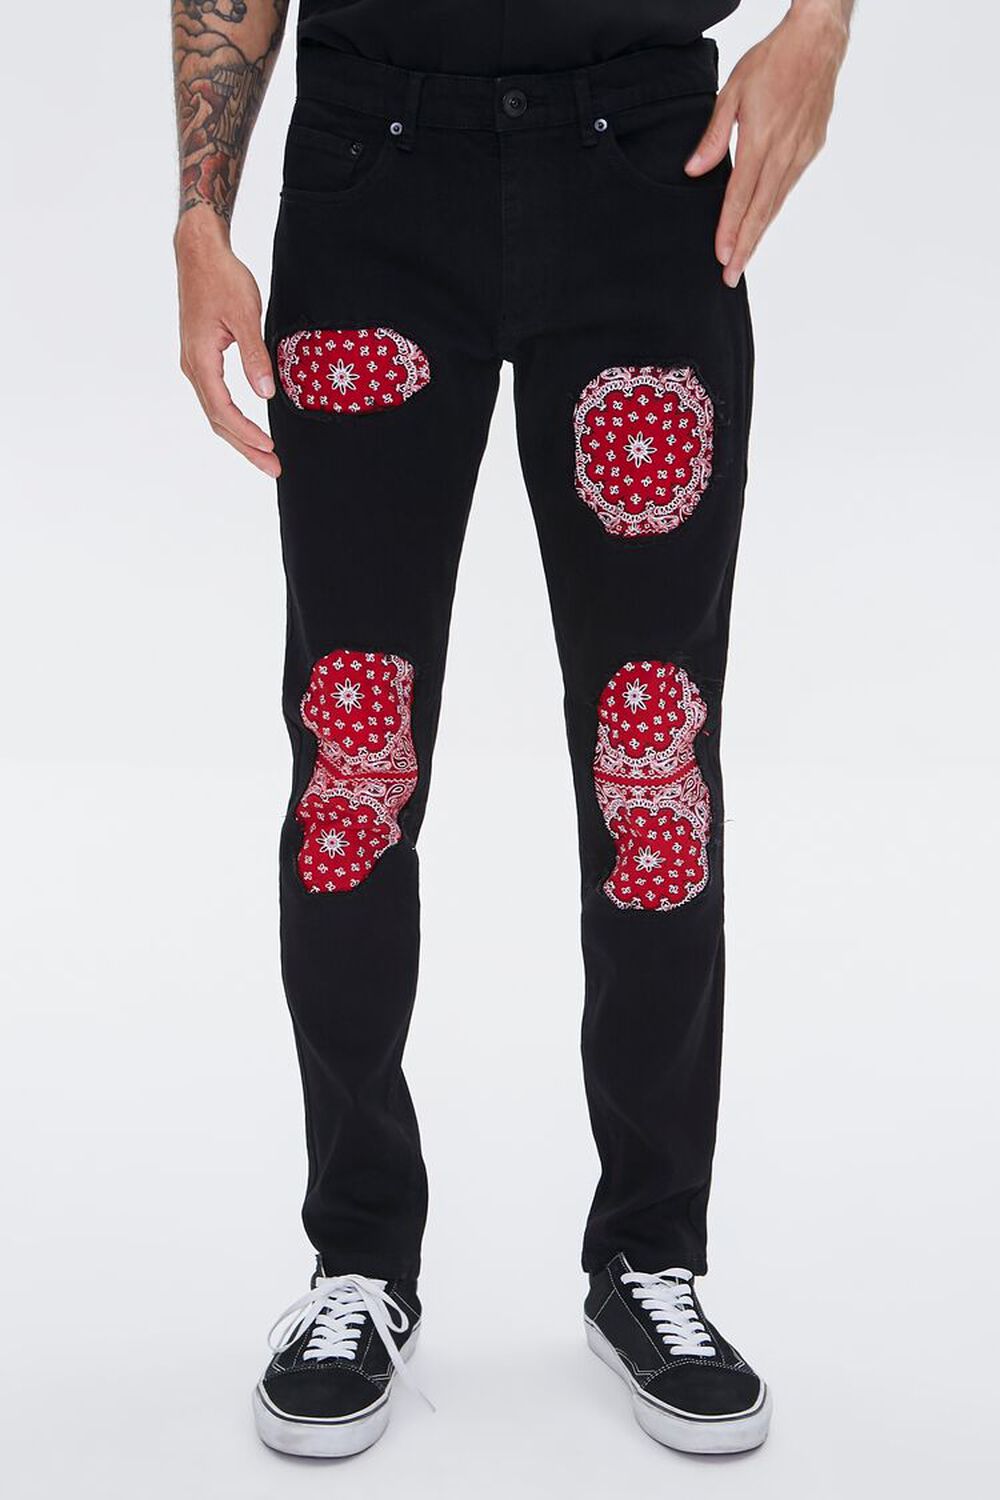 BLACK/RED Bandana-Patch Skinny Jeans, image 2